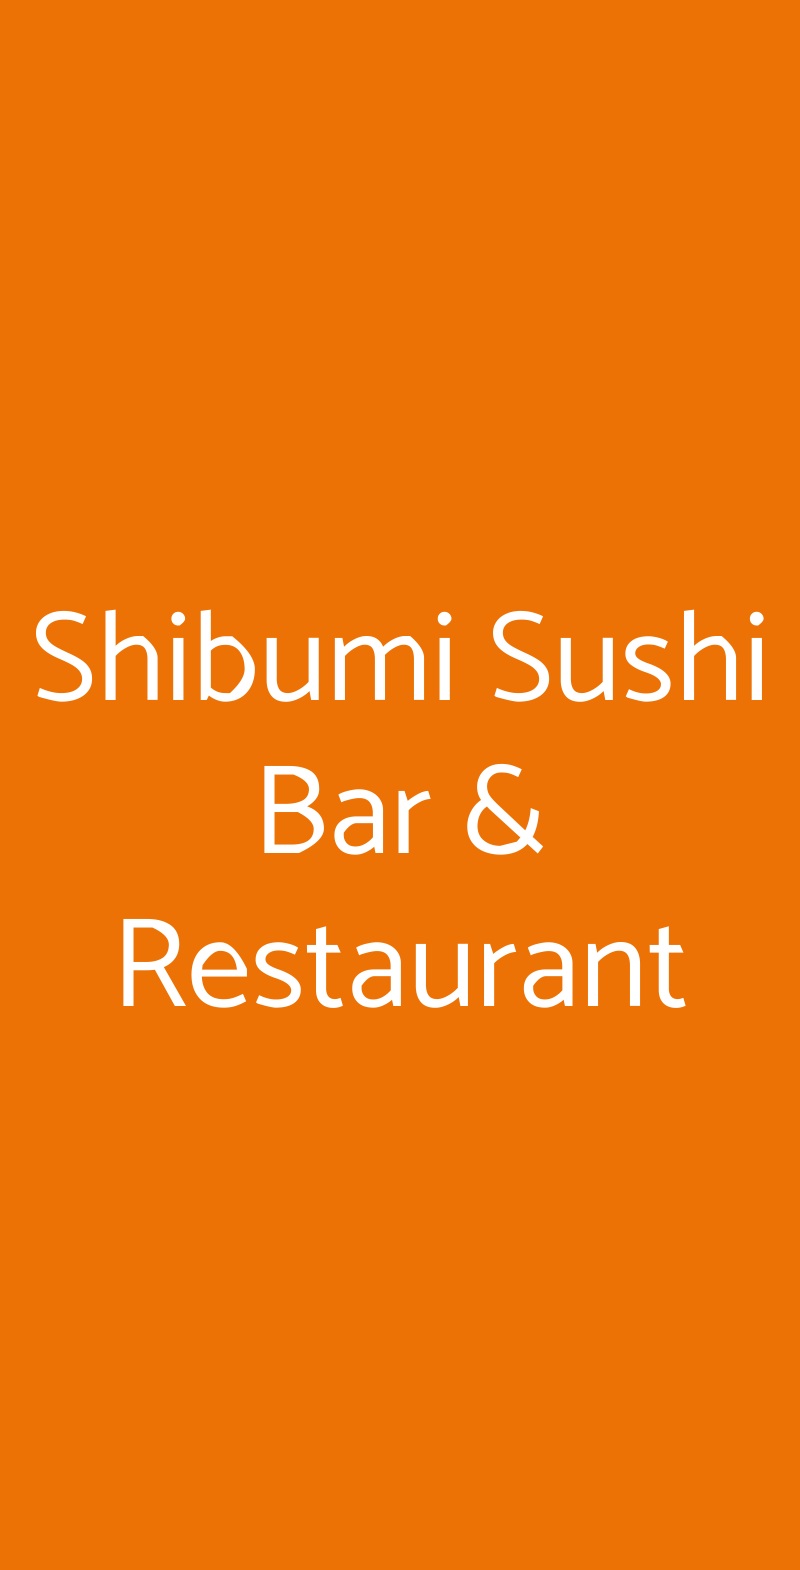 Shibumi Sushi Bar & Restaurant Potenza menù 1 pagina